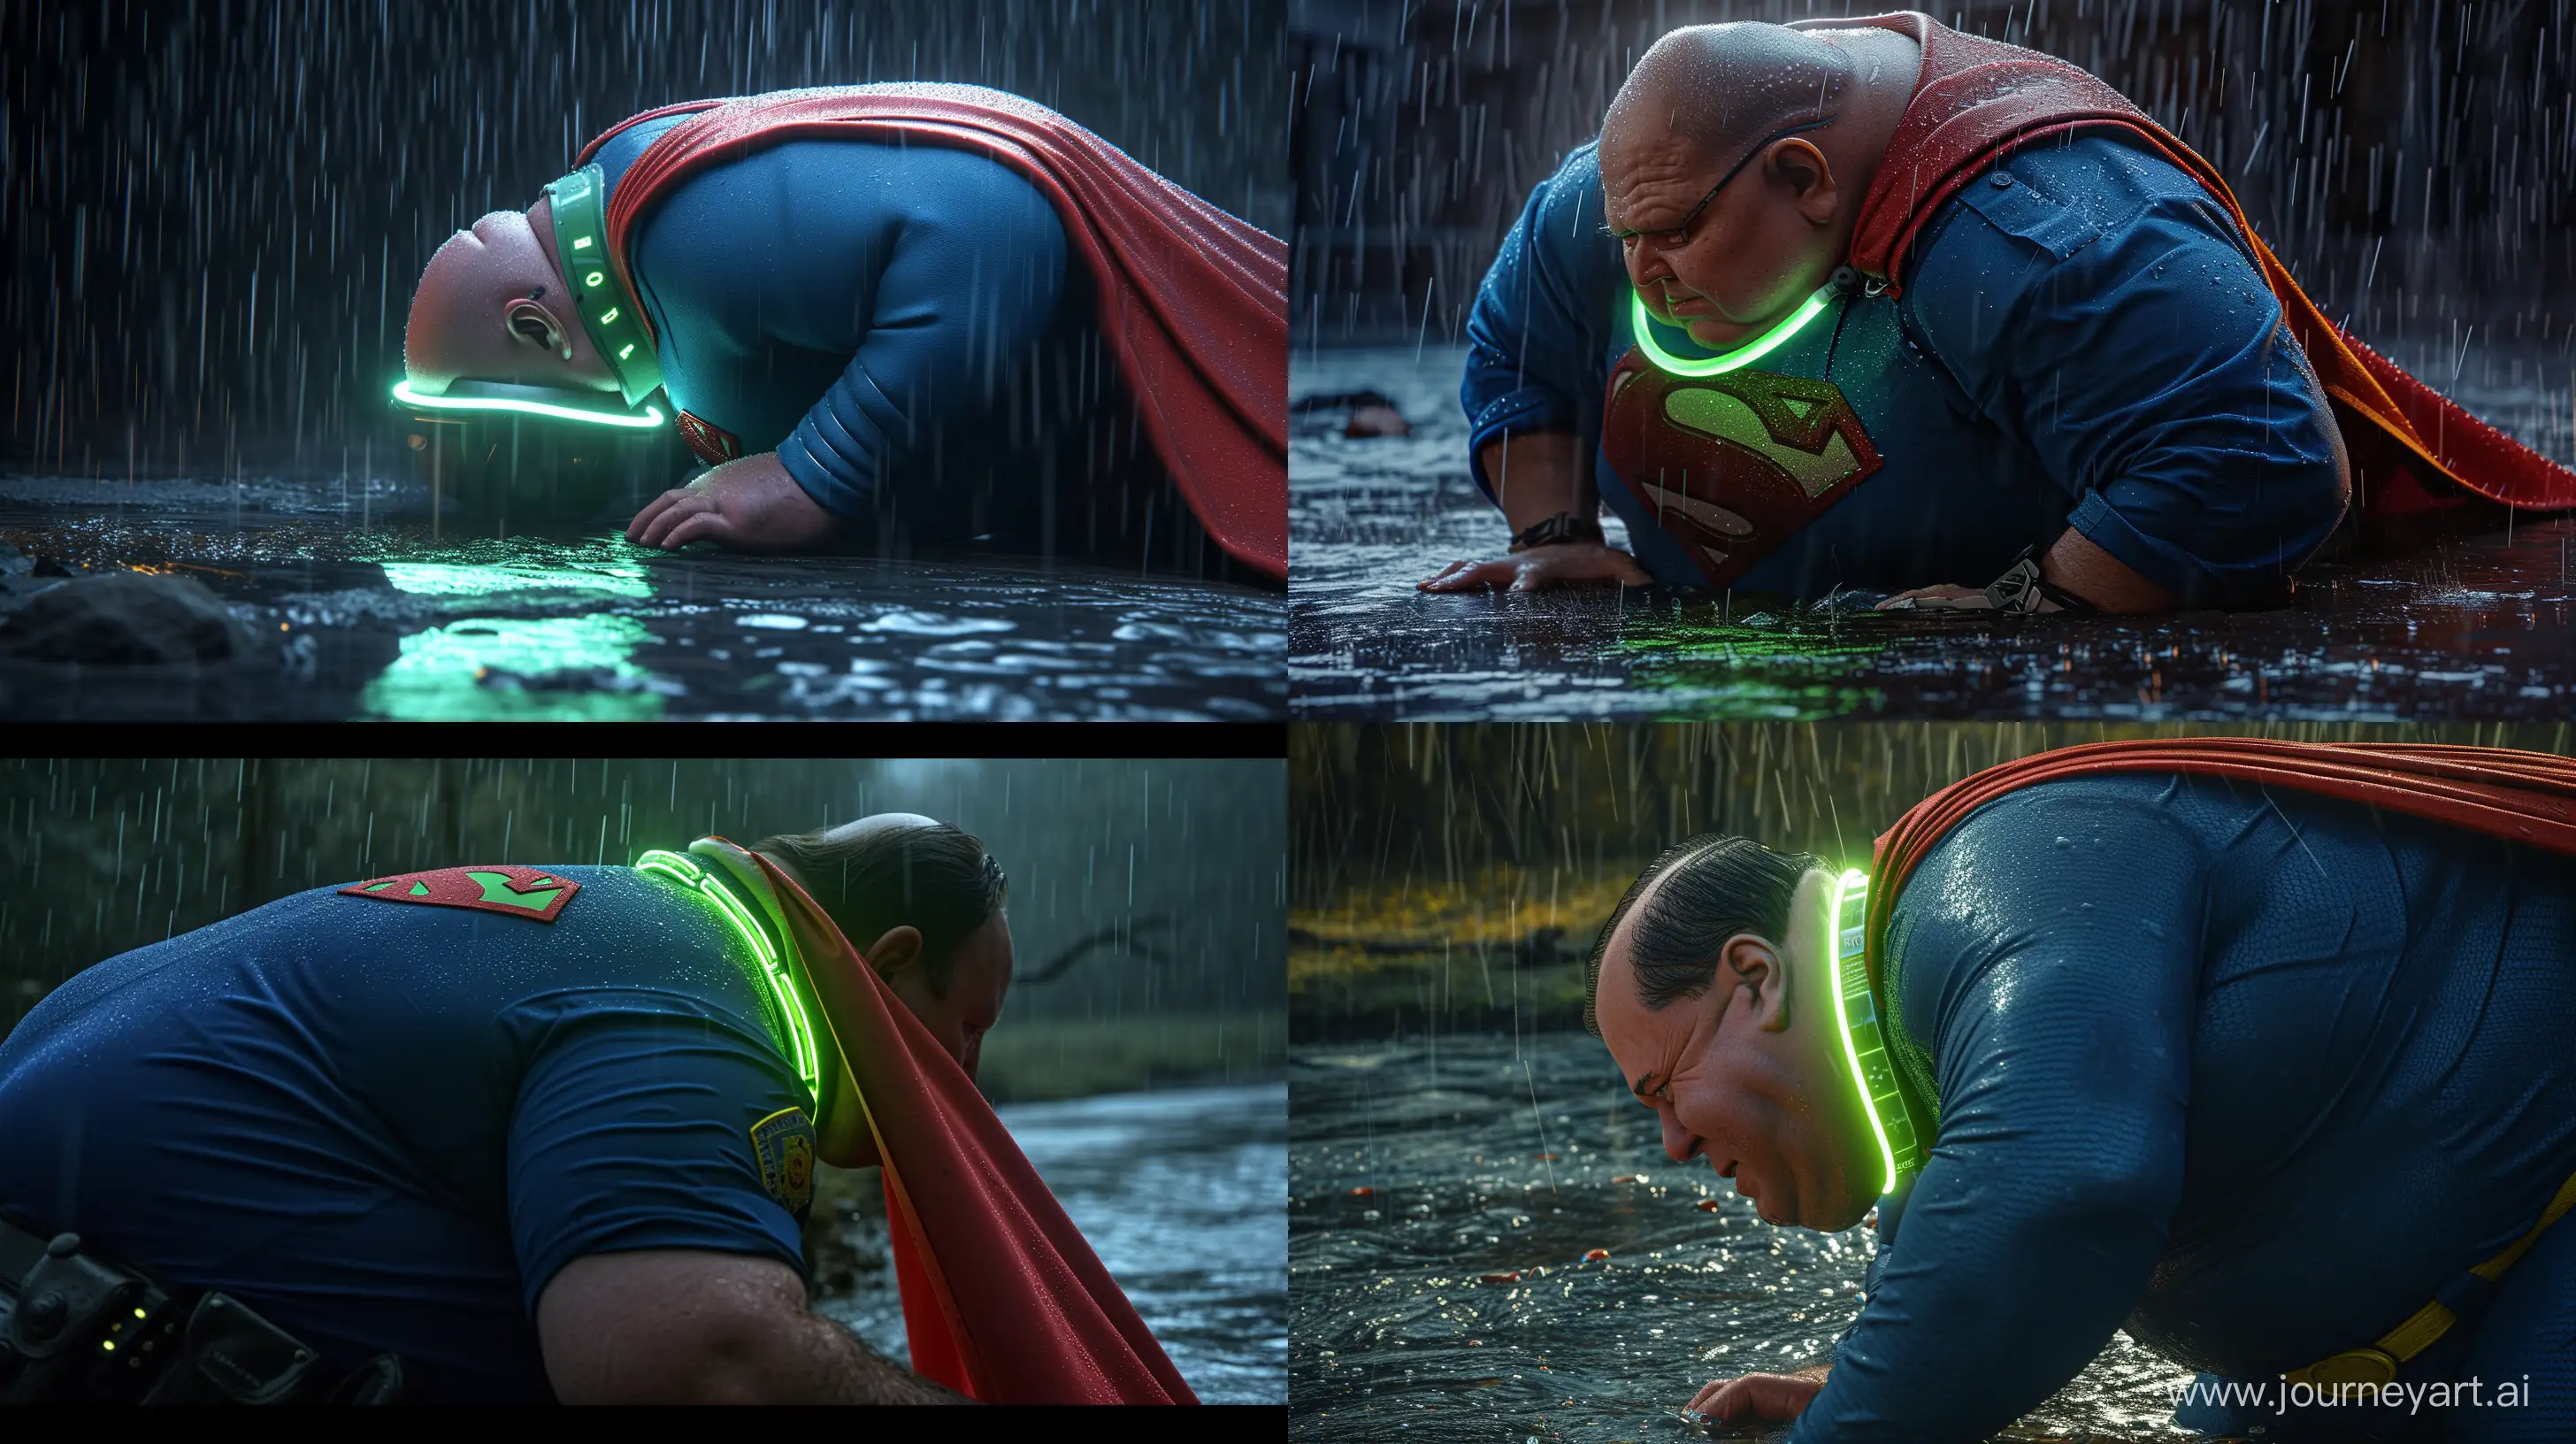 Elderly-Superman-Crawling-in-Rain-Receives-Unique-Neon-Dog-Collar-Tightening